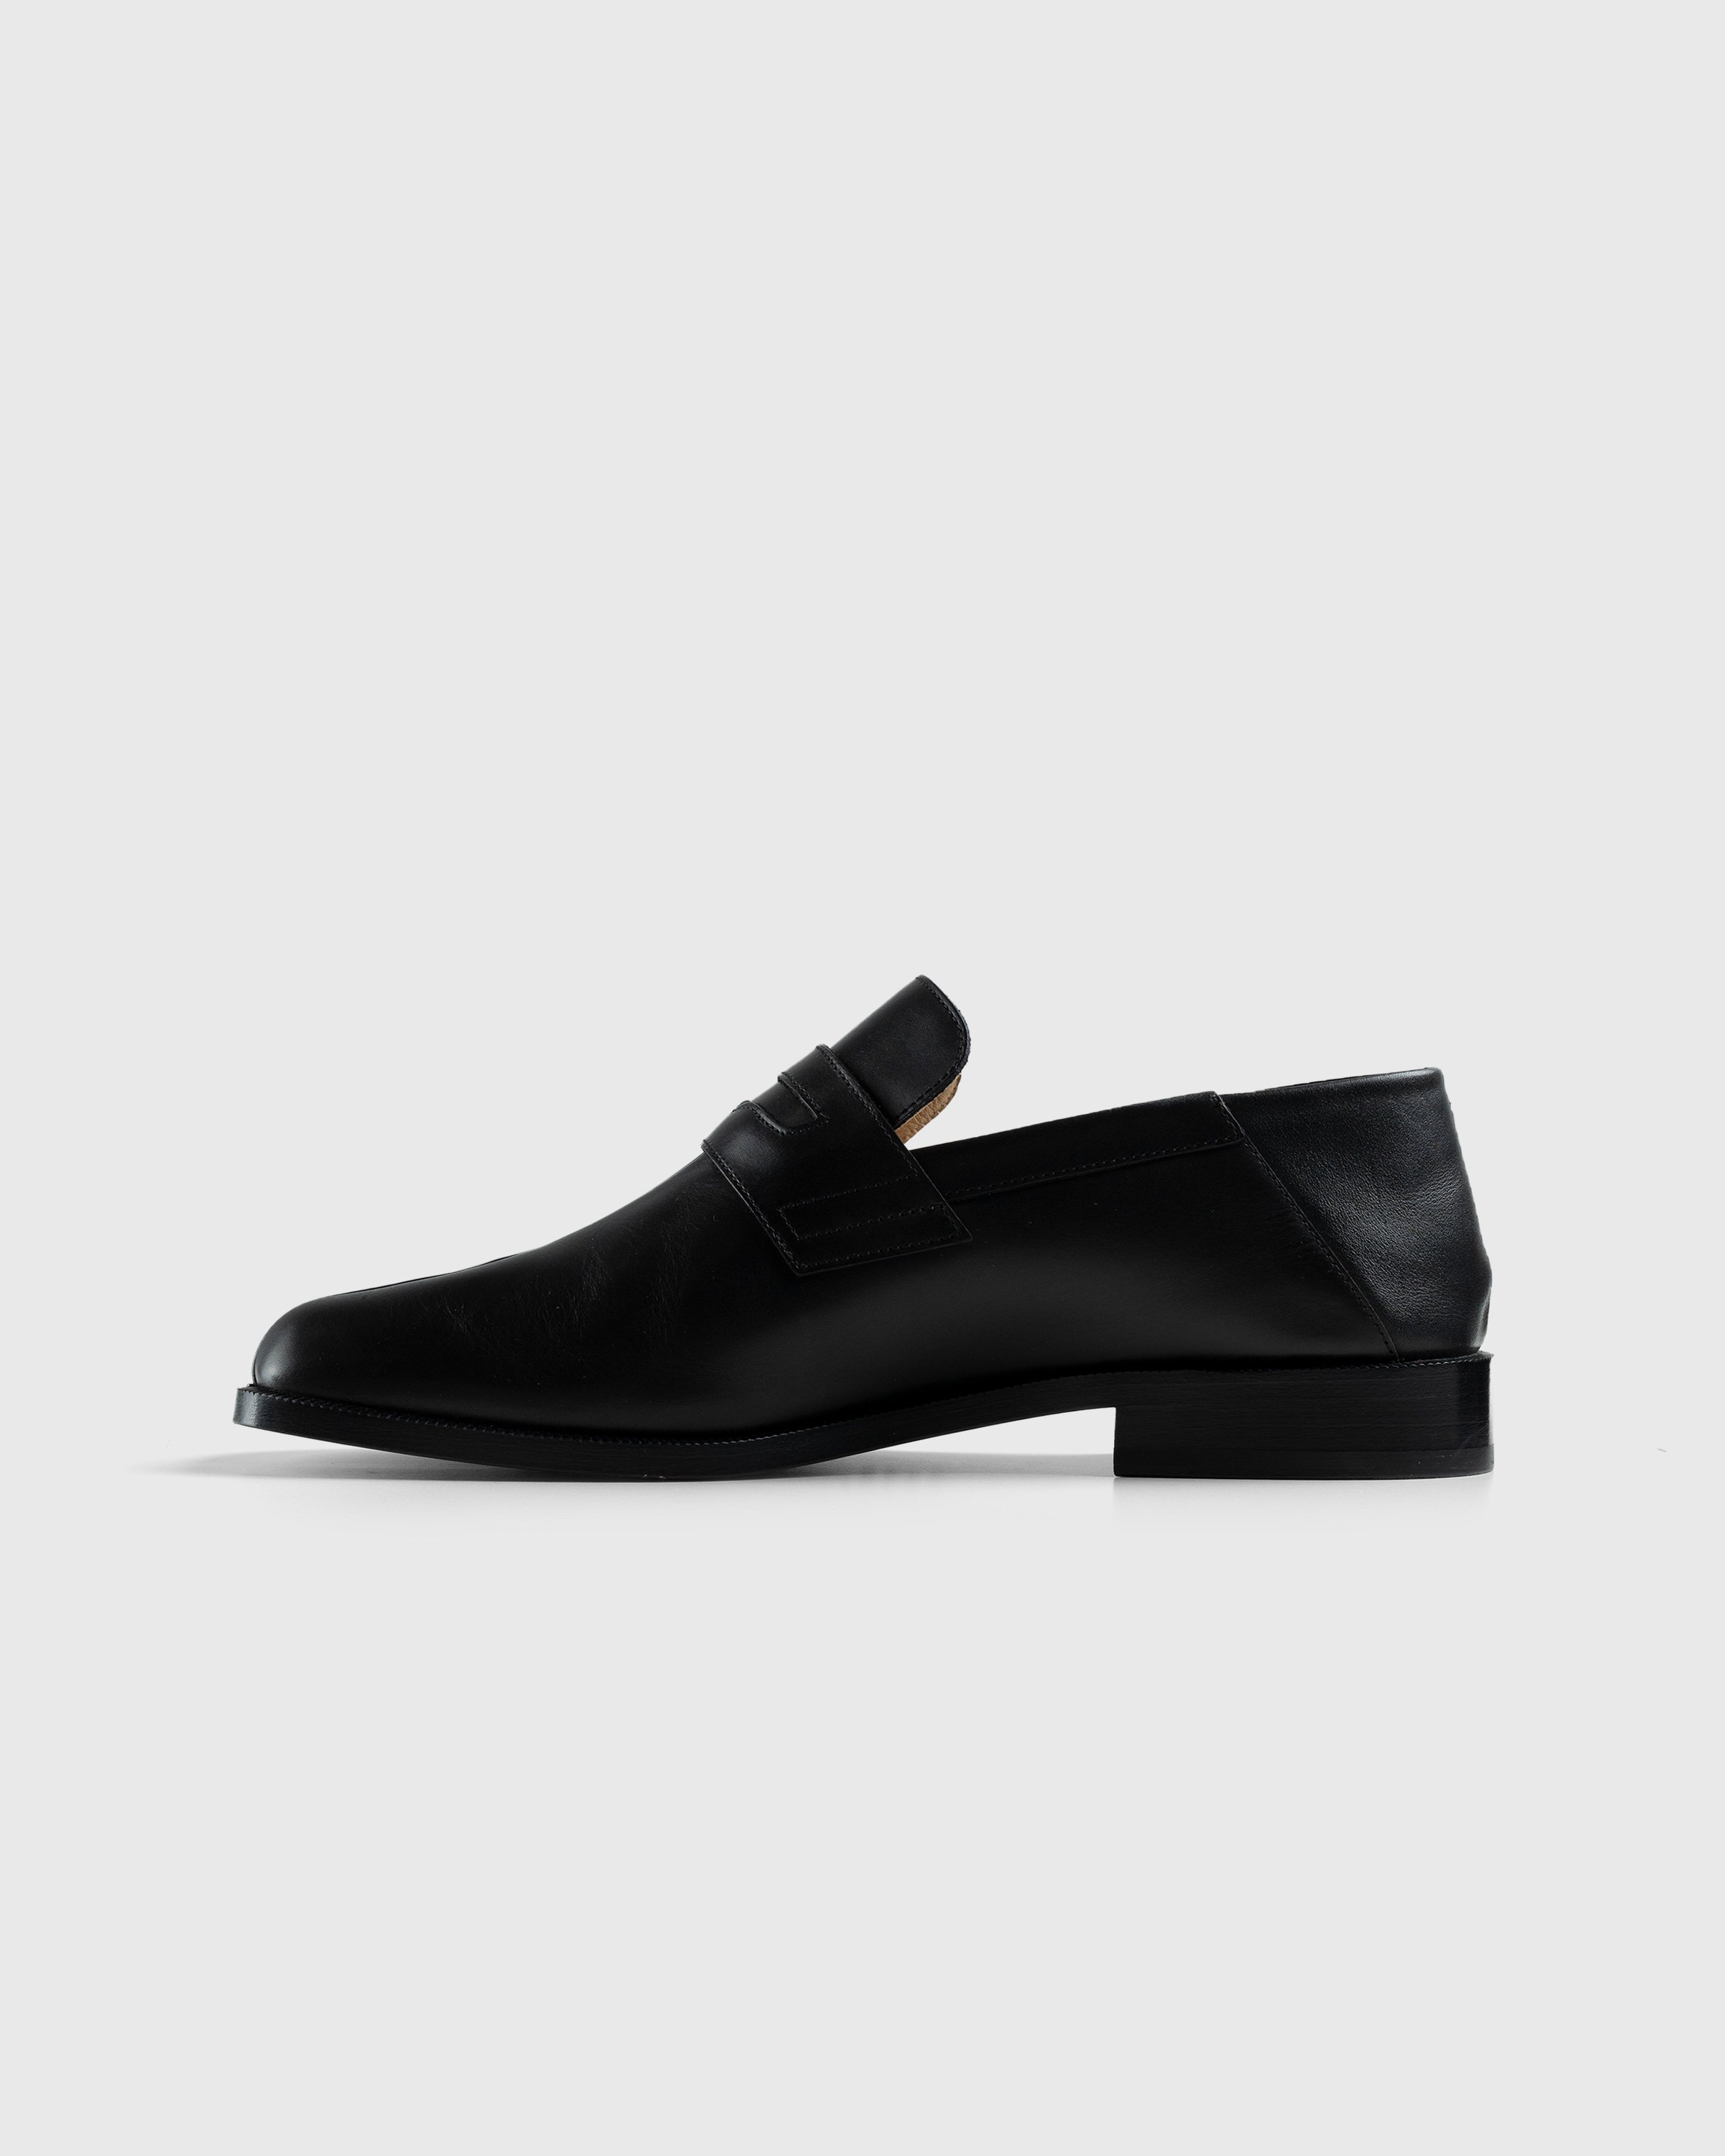 Maison Margiela - Tabi Loafer Babouche - Footwear - Black - Image 2